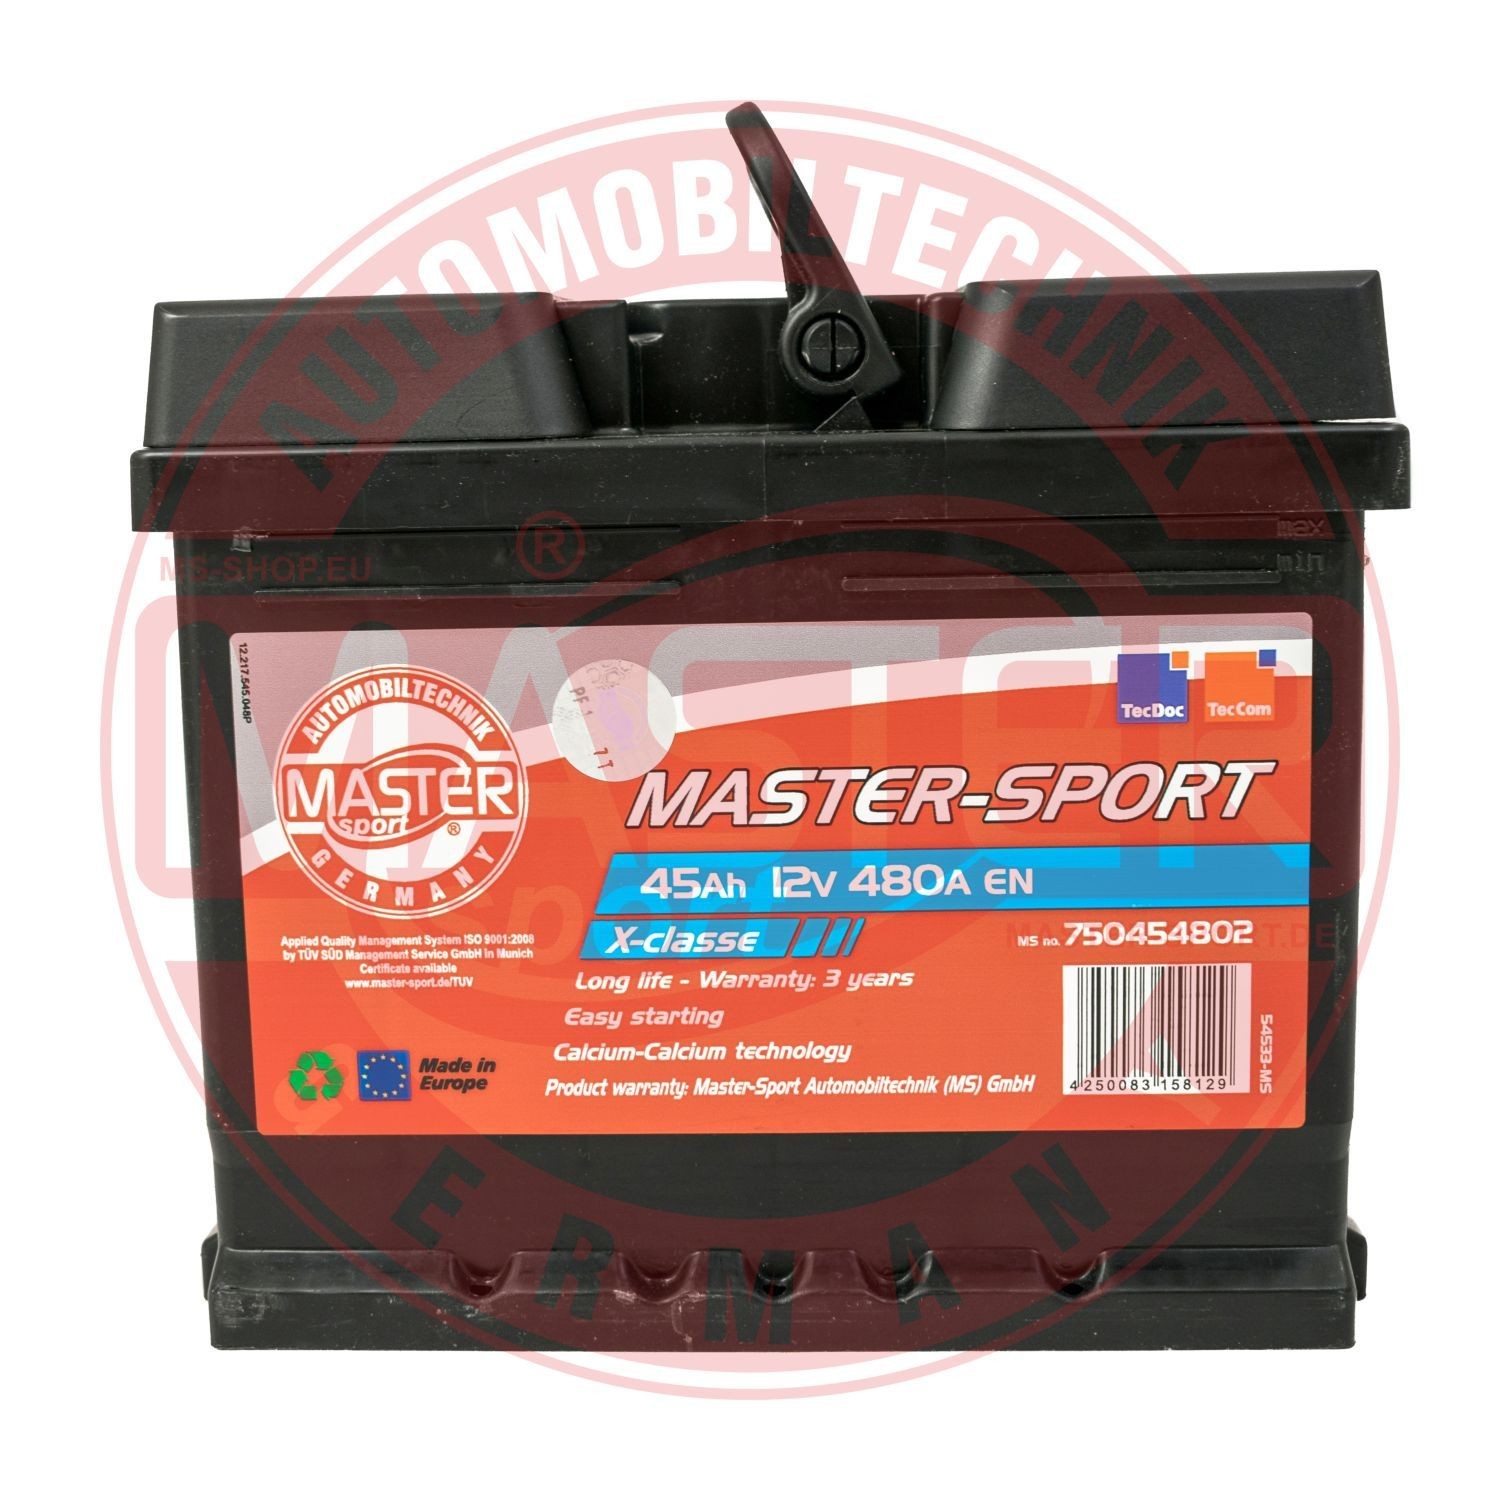 Original 780454802 MASTER-SPORT Start stop battery AUDI